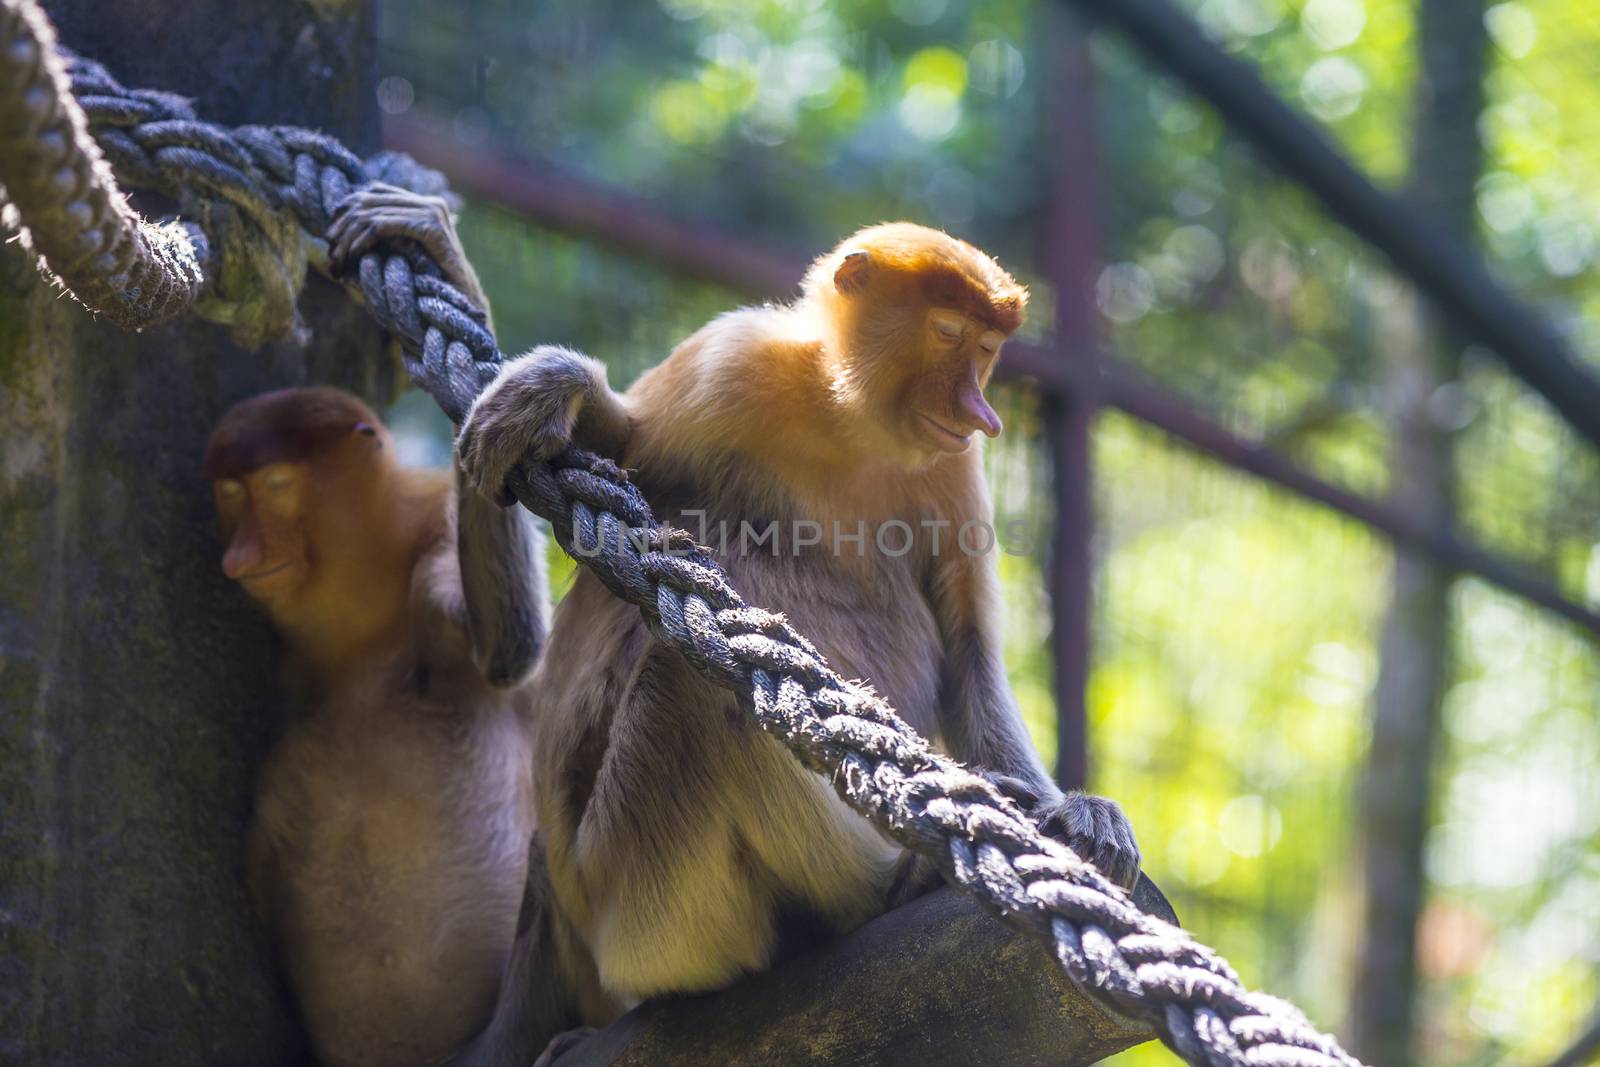 Proboscis monkey in the zoo garden.